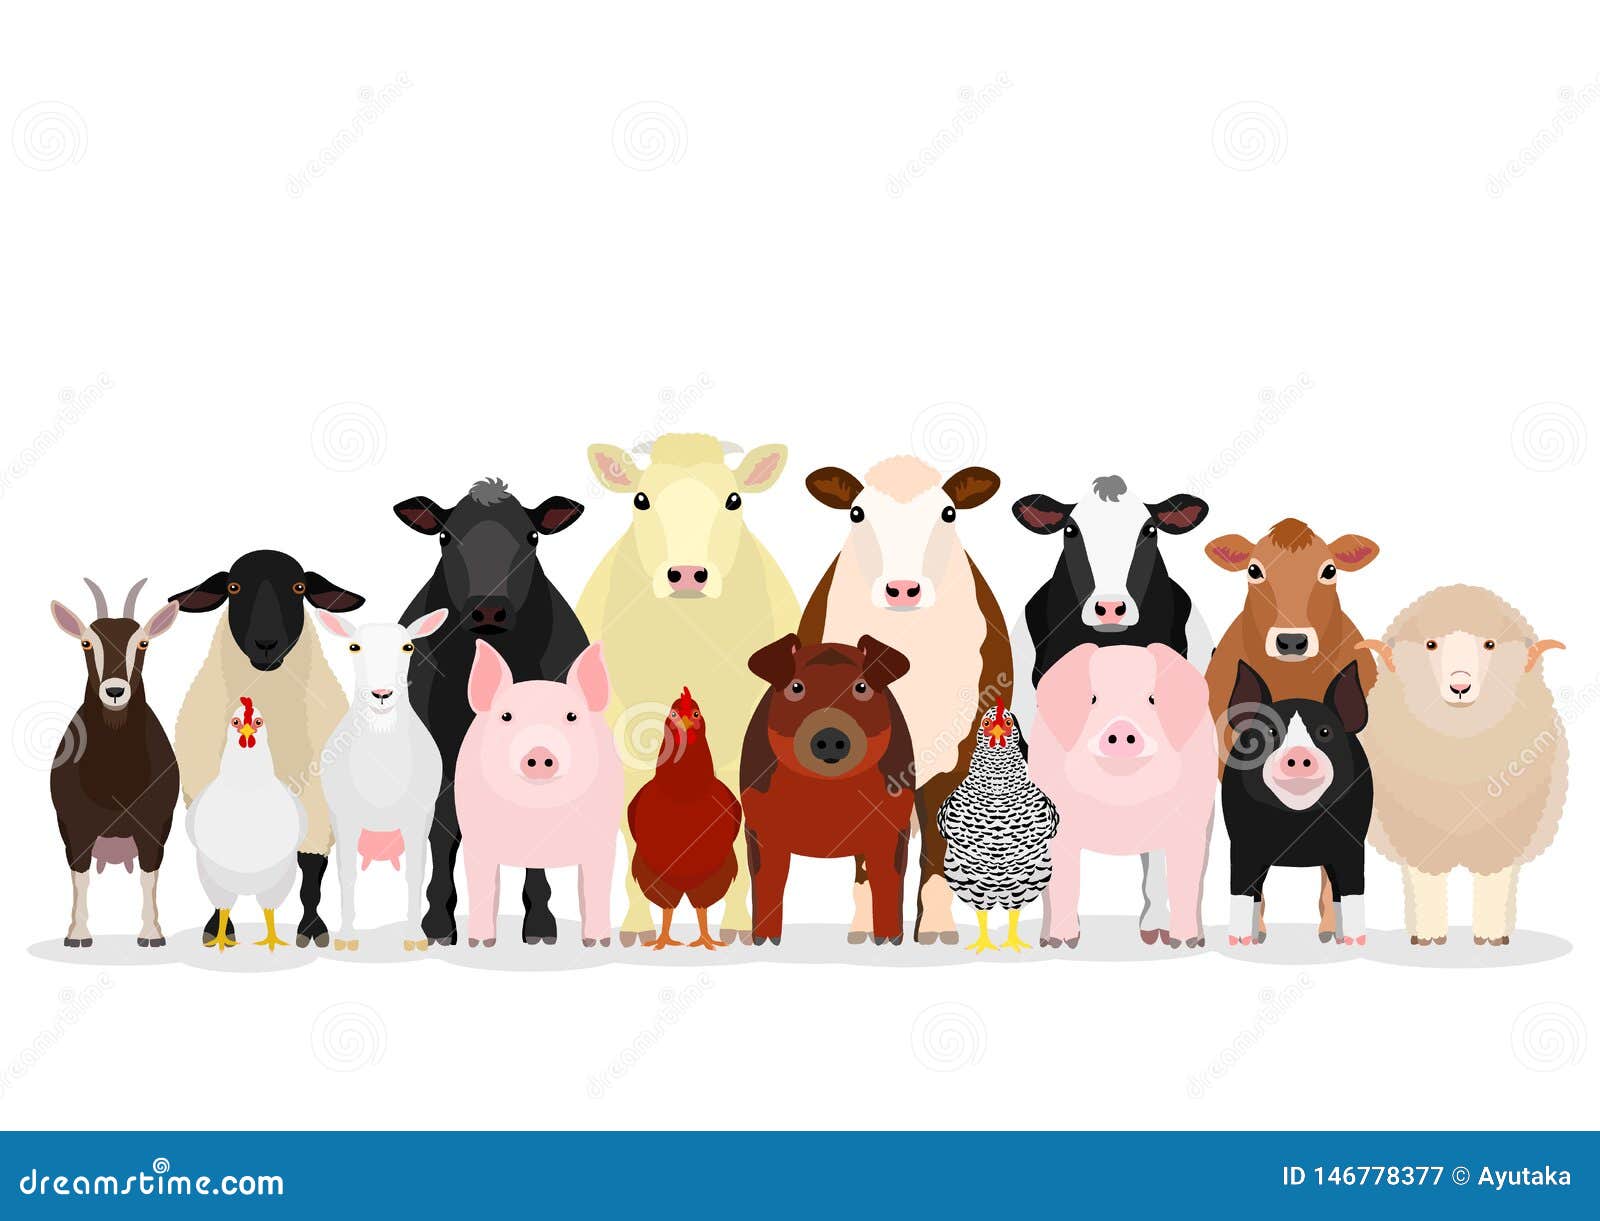 various livestock group